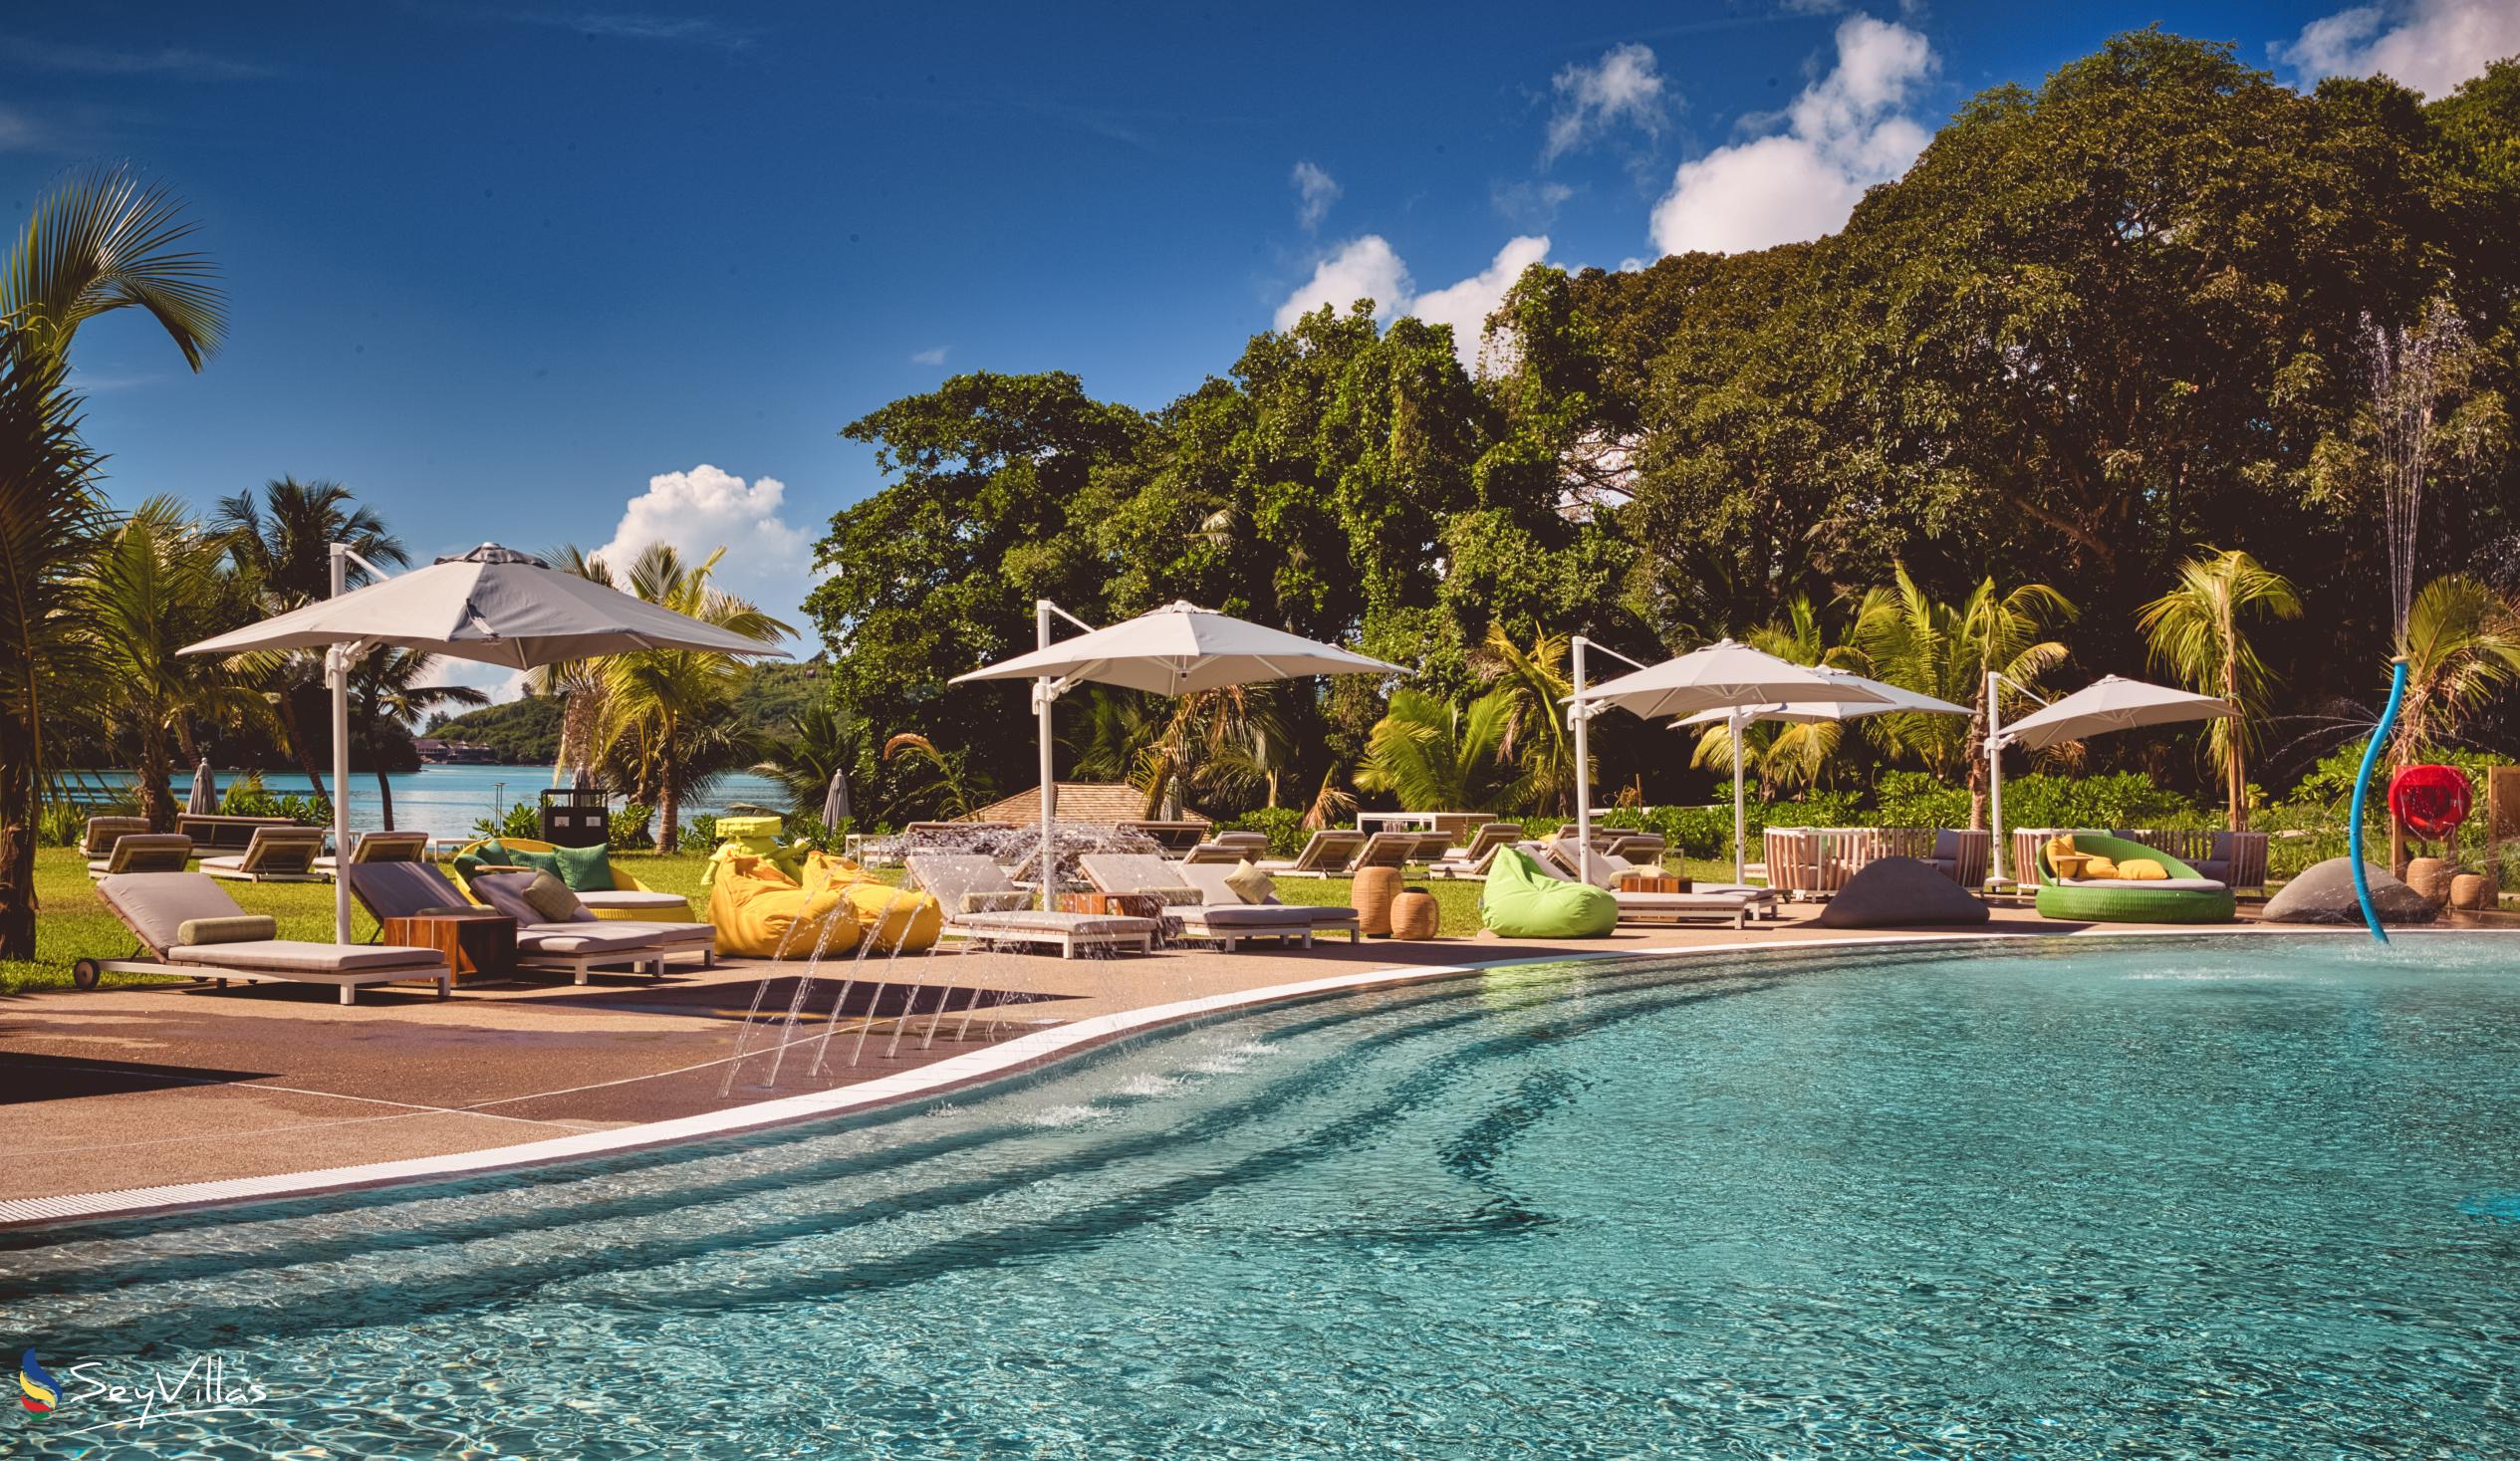 Foto 9: Club Med Seychelles - Esterno - Saint Anne (Seychelles)